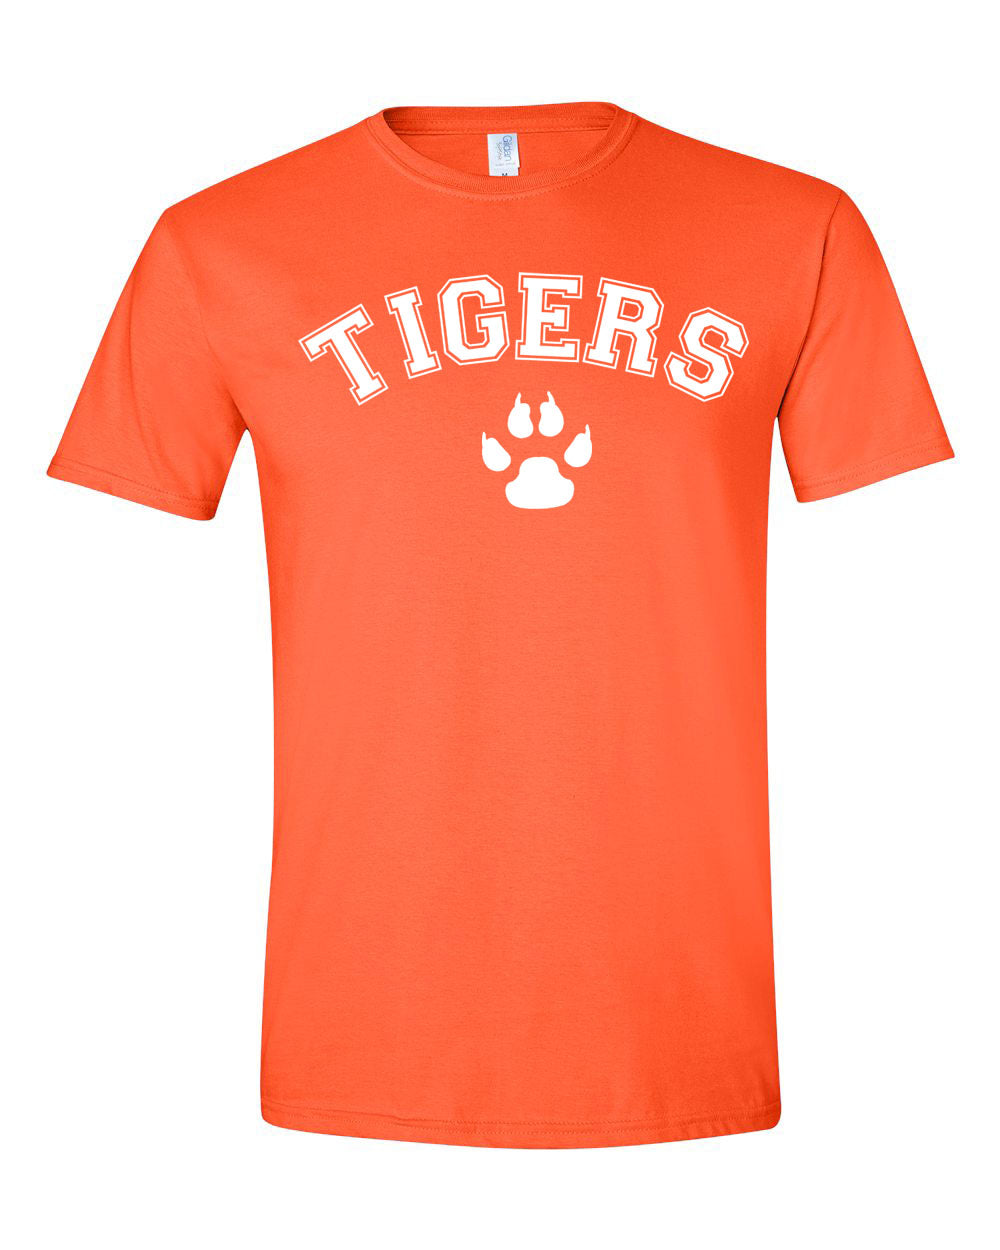 Tigers Design 3 T-Shirt